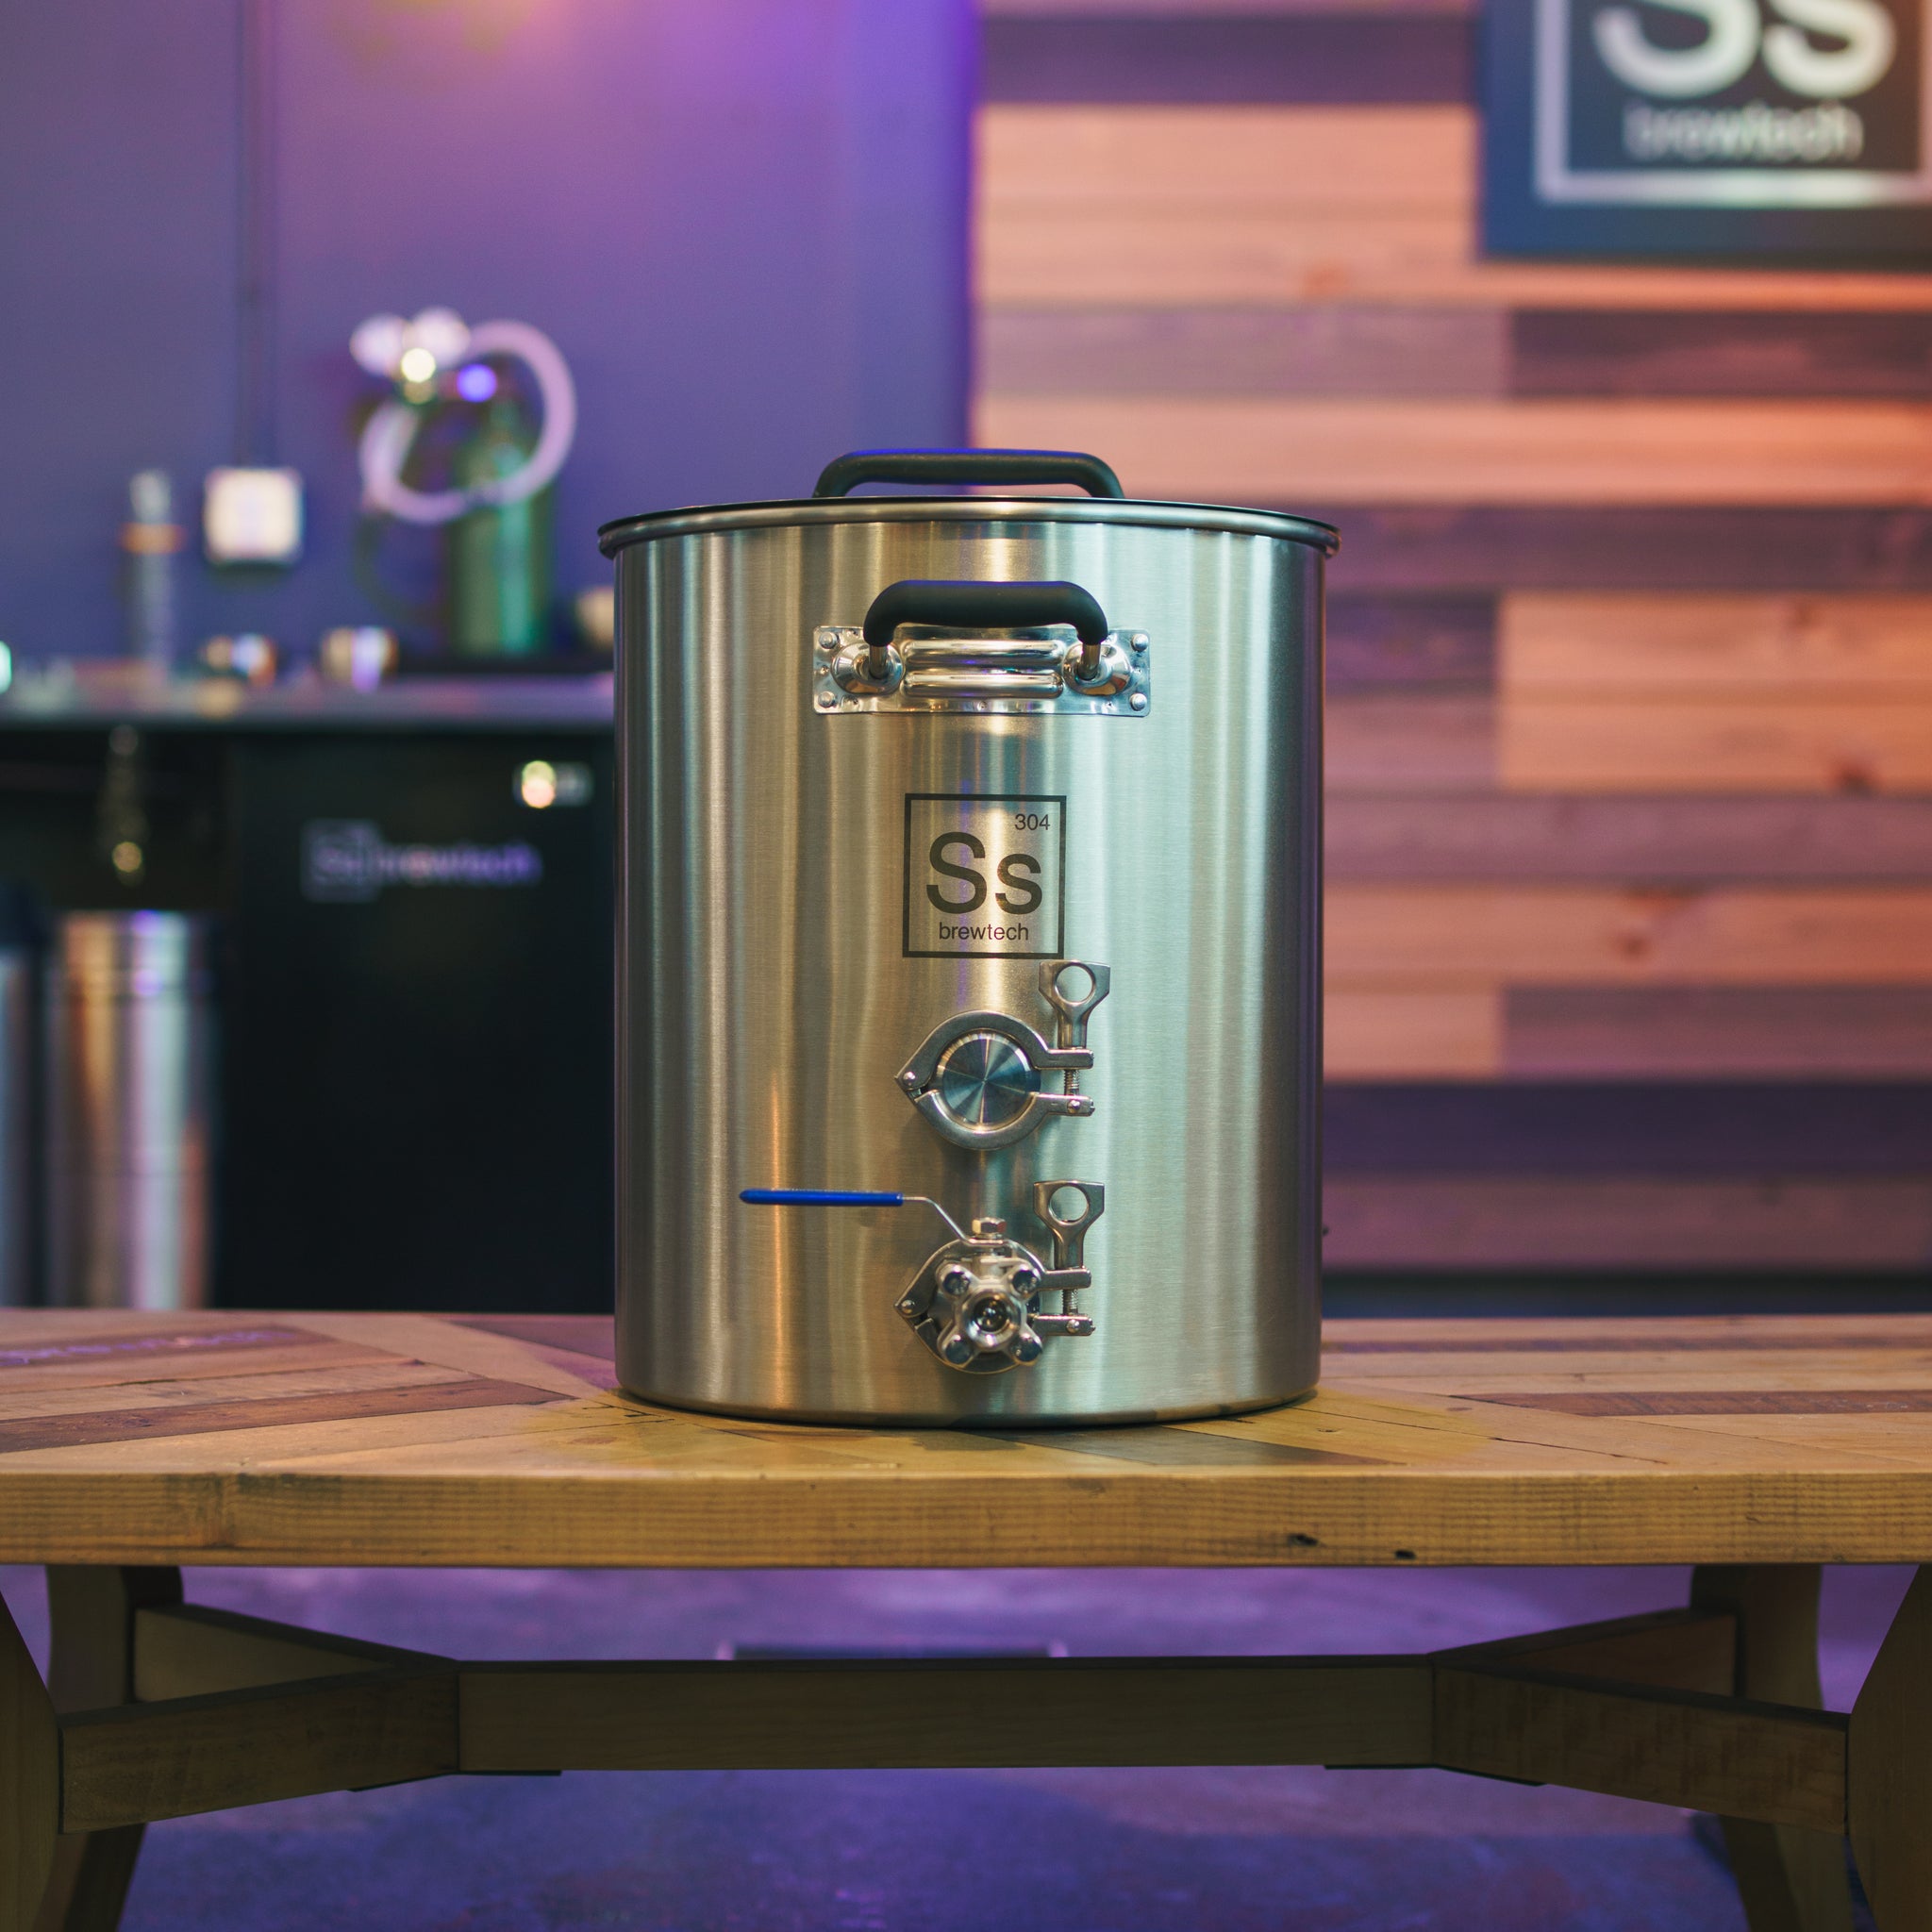 Ss Brewtech 5.5 Gallon Brew Kettle - KJ Urban Winery & Craft